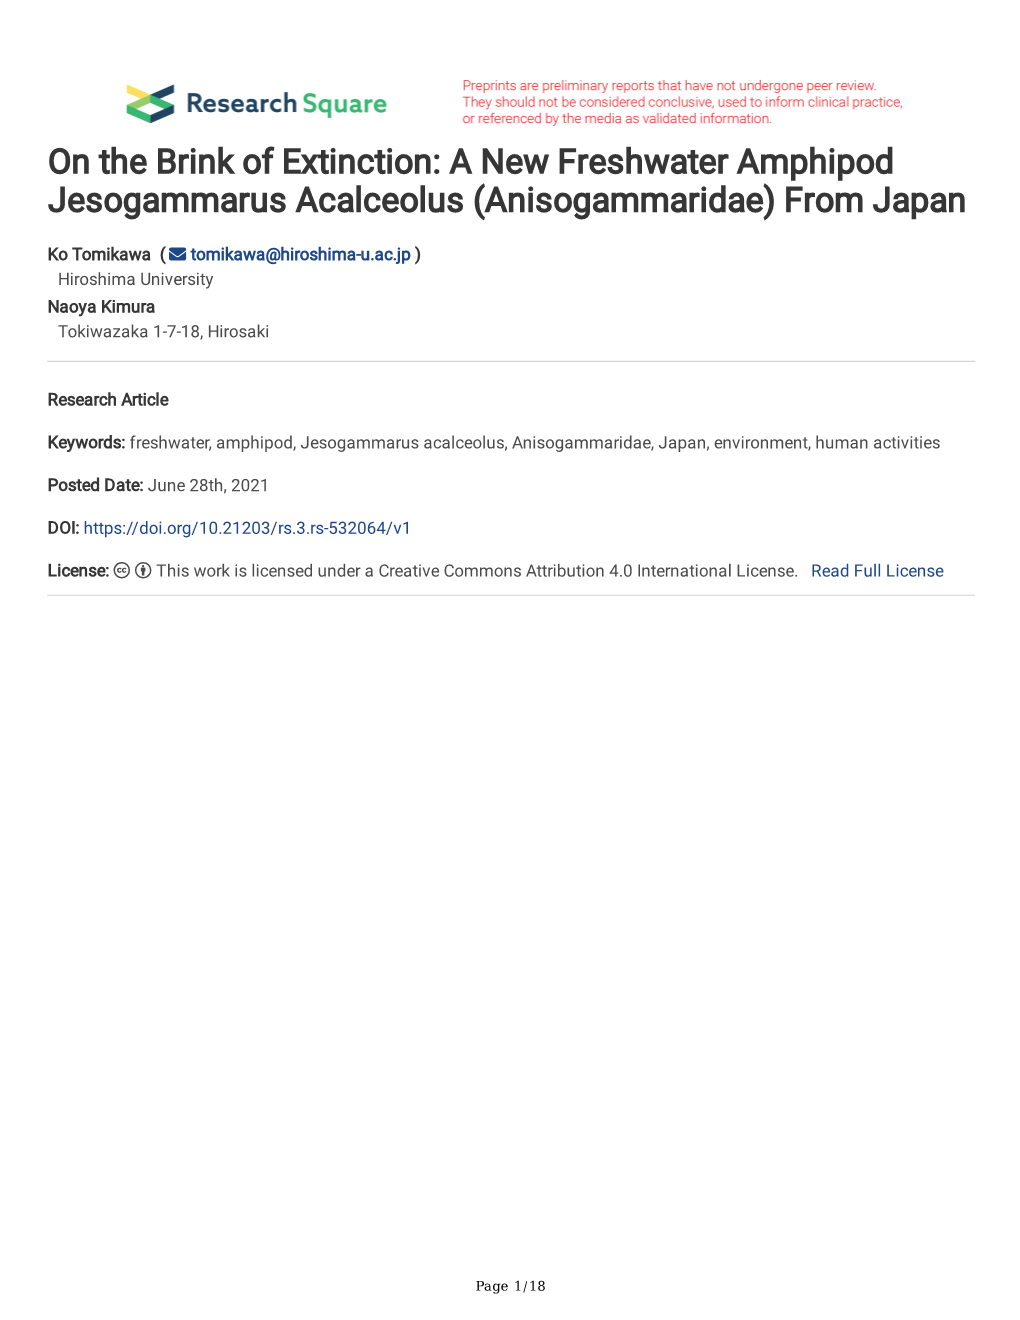 On the Brink of Extinction: a New Freshwater Amphipod Jesogammarus Acalceolus (Anisogammaridae) from Japan